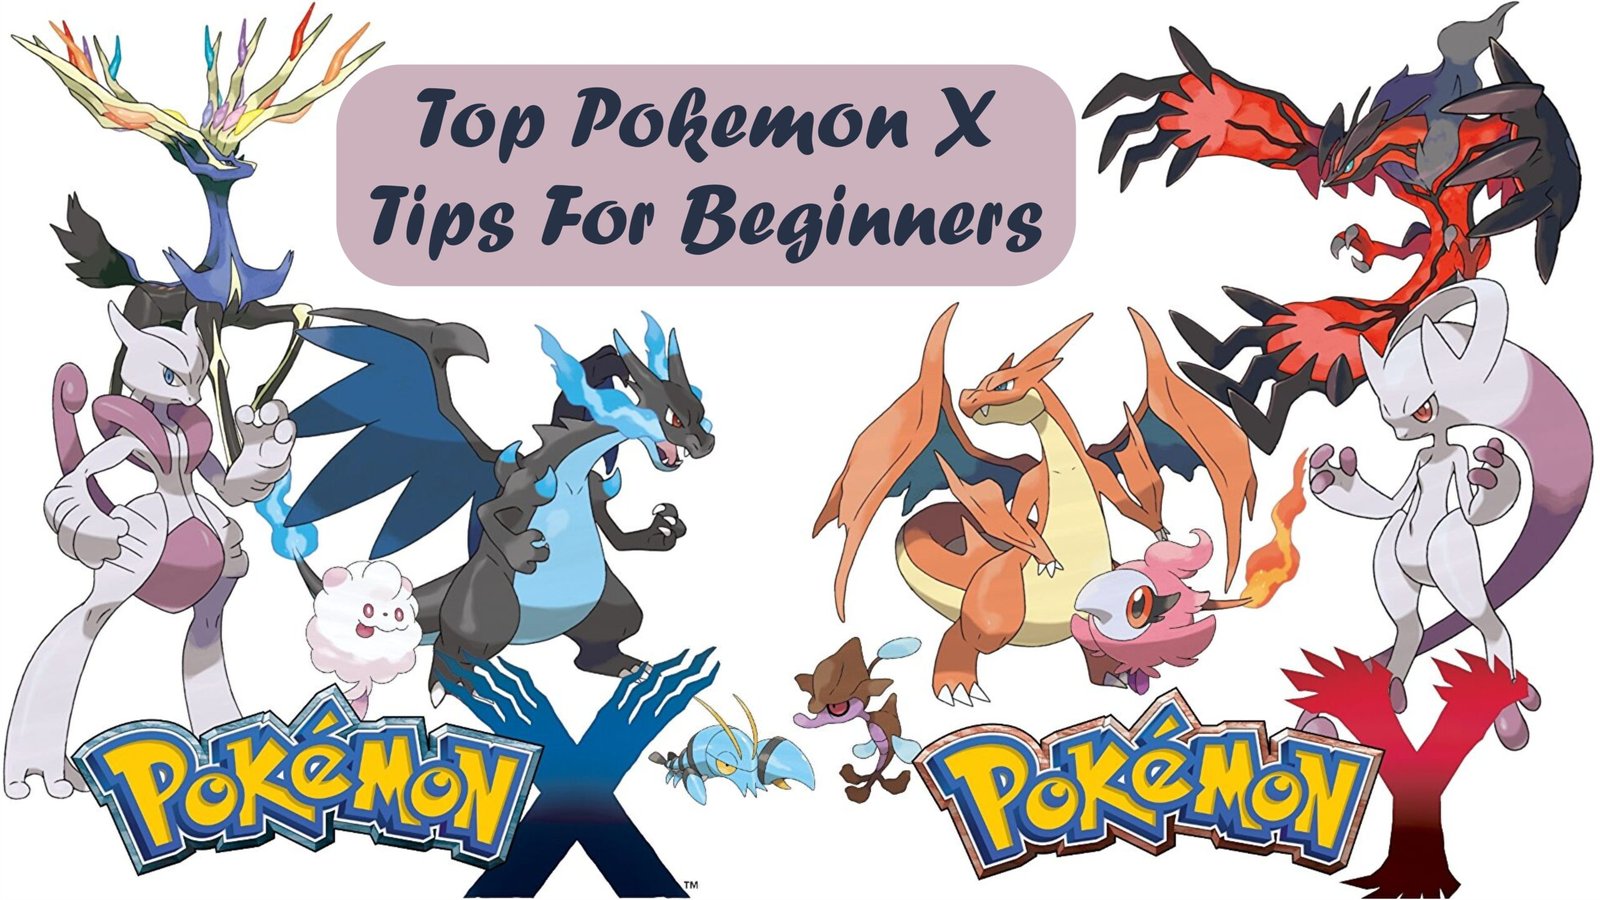 Top Pokemon X Tips For Beginners